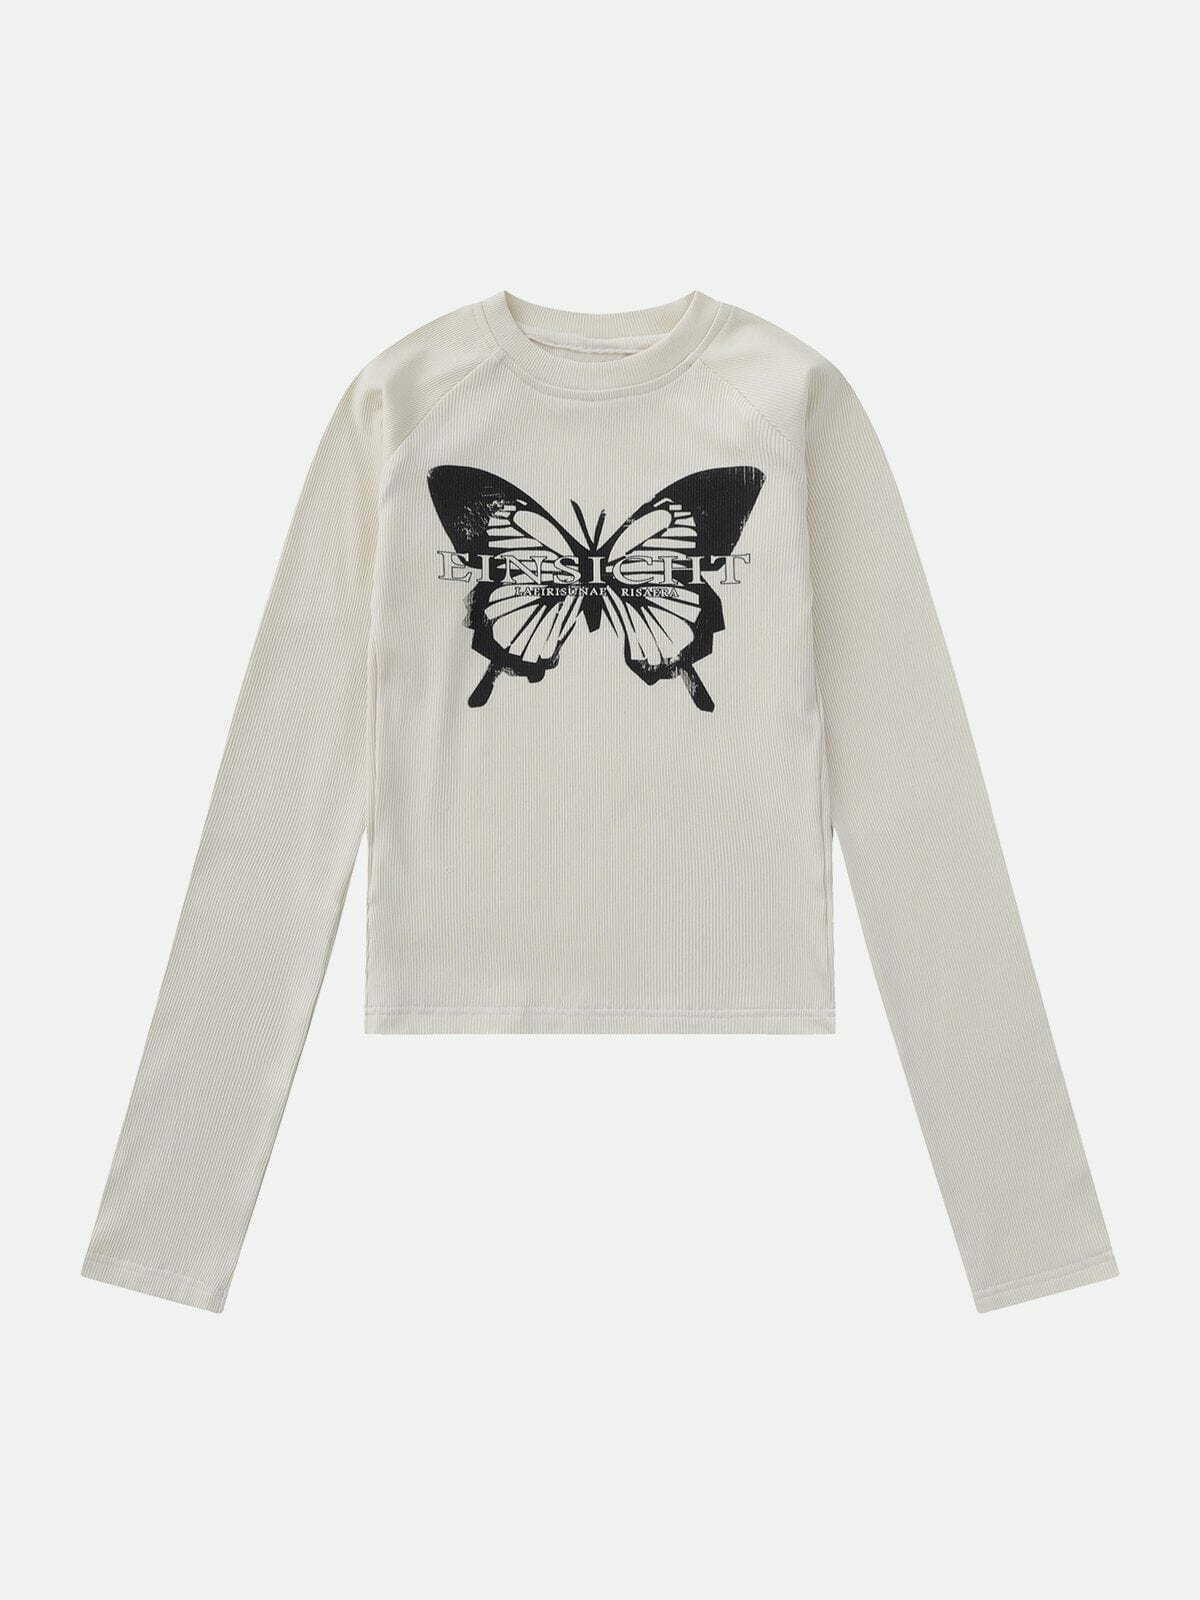 youthful butterfly cutout top   sleek long sleeve design 8487